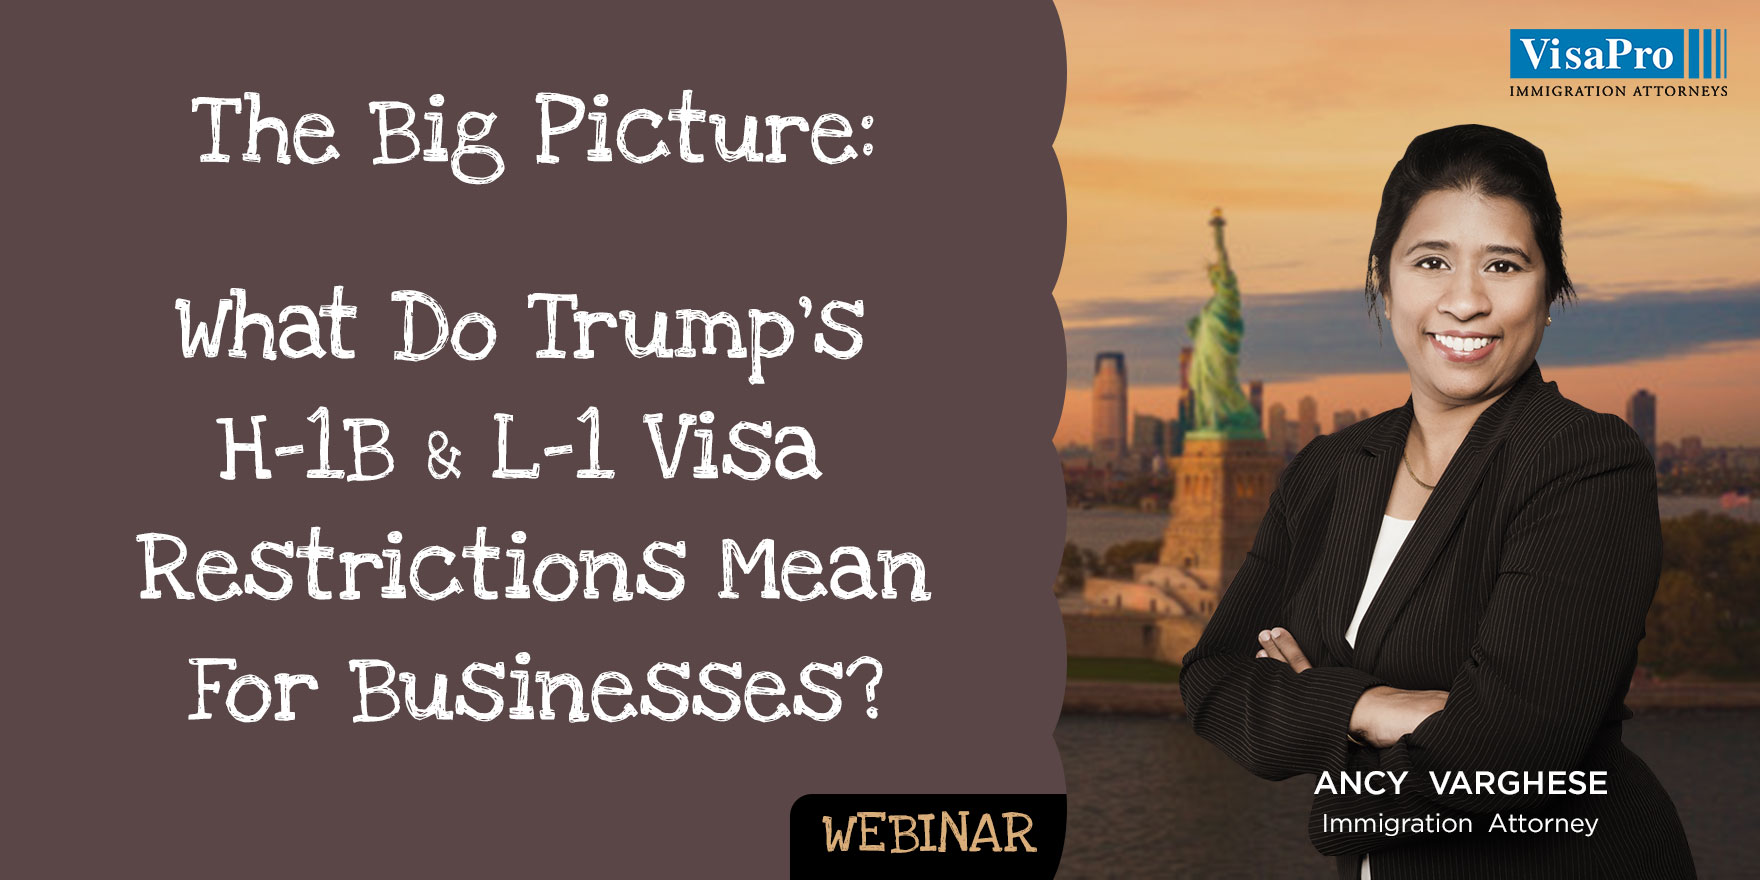 The Big Picture: What Do Trump’s H-1B & L-1 Visa Restrictions Mean For Businesses?, Lyon, Ariège, France